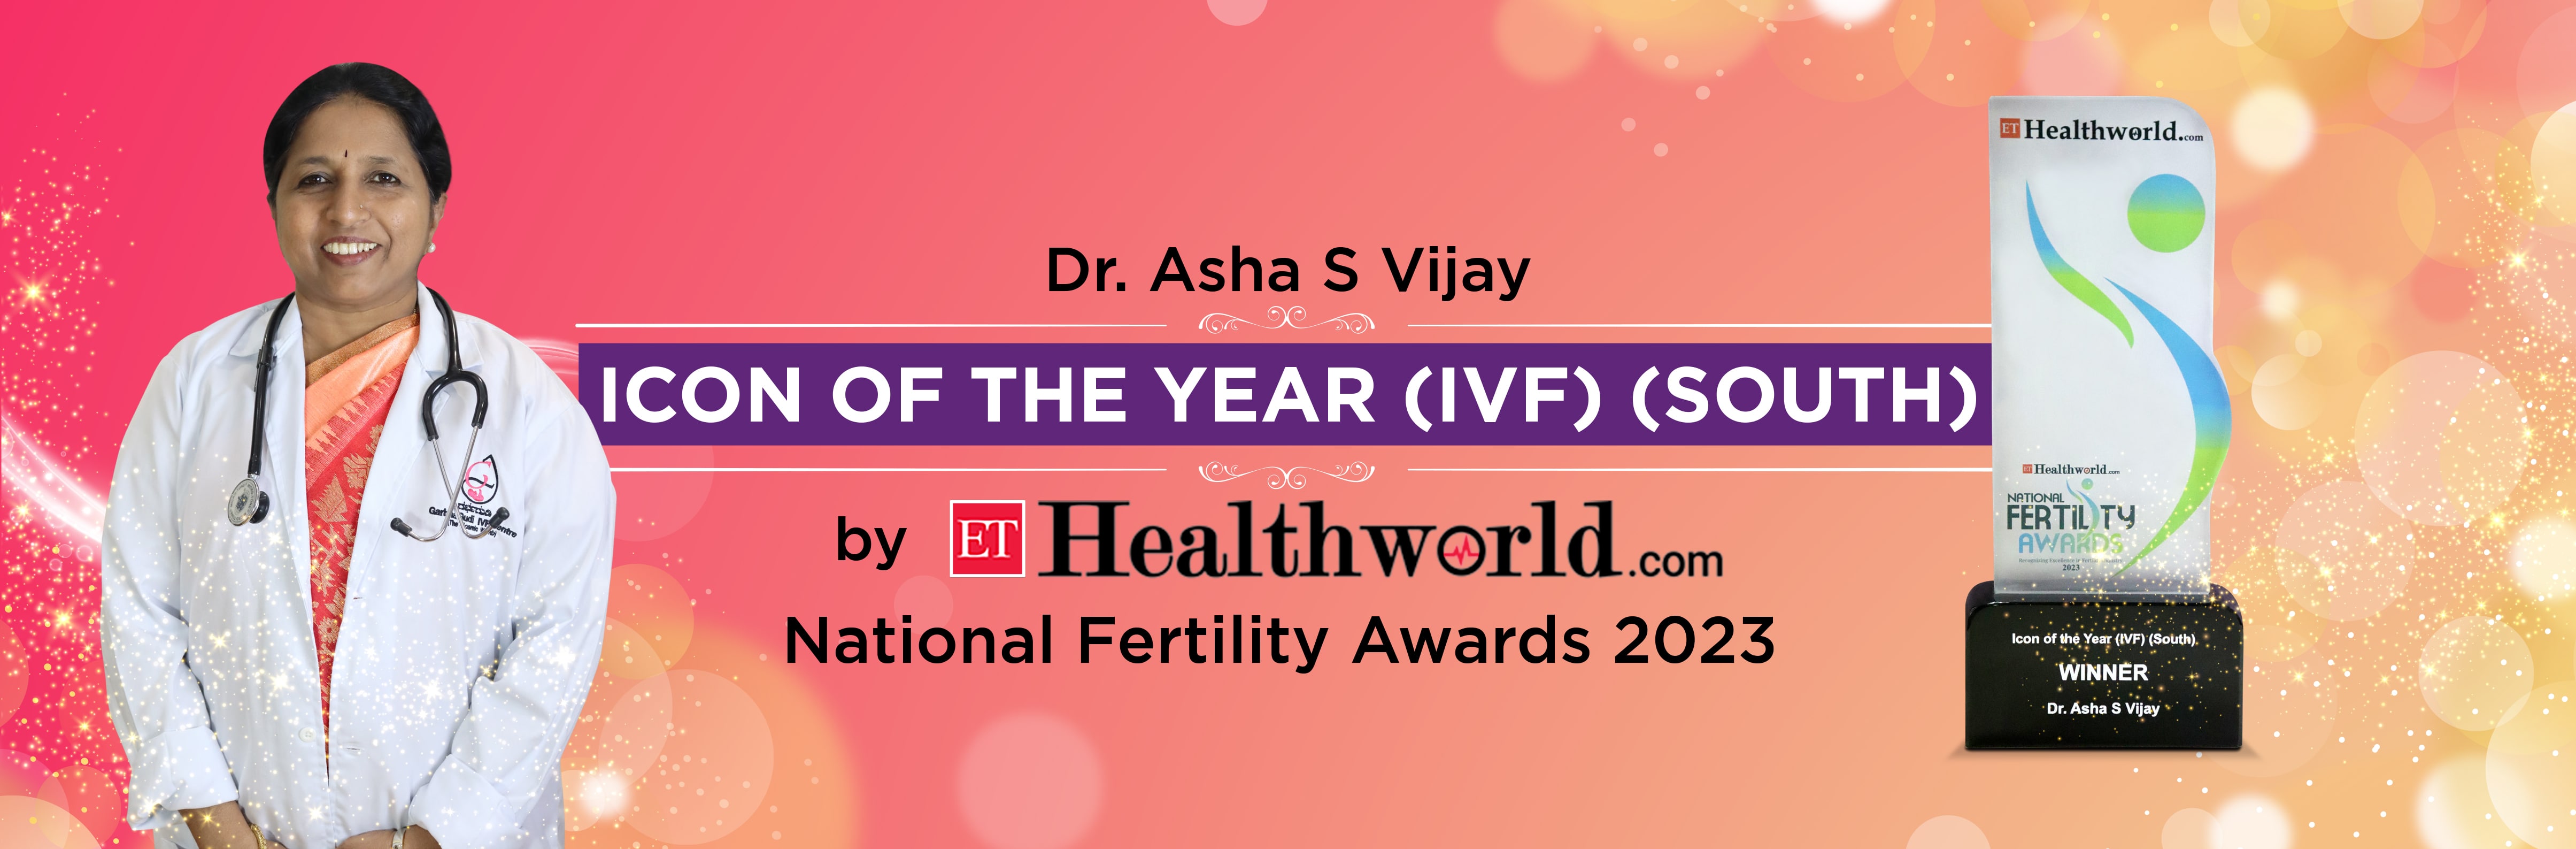 Dr. Asha S Vijay Icon of the Year IVF South 